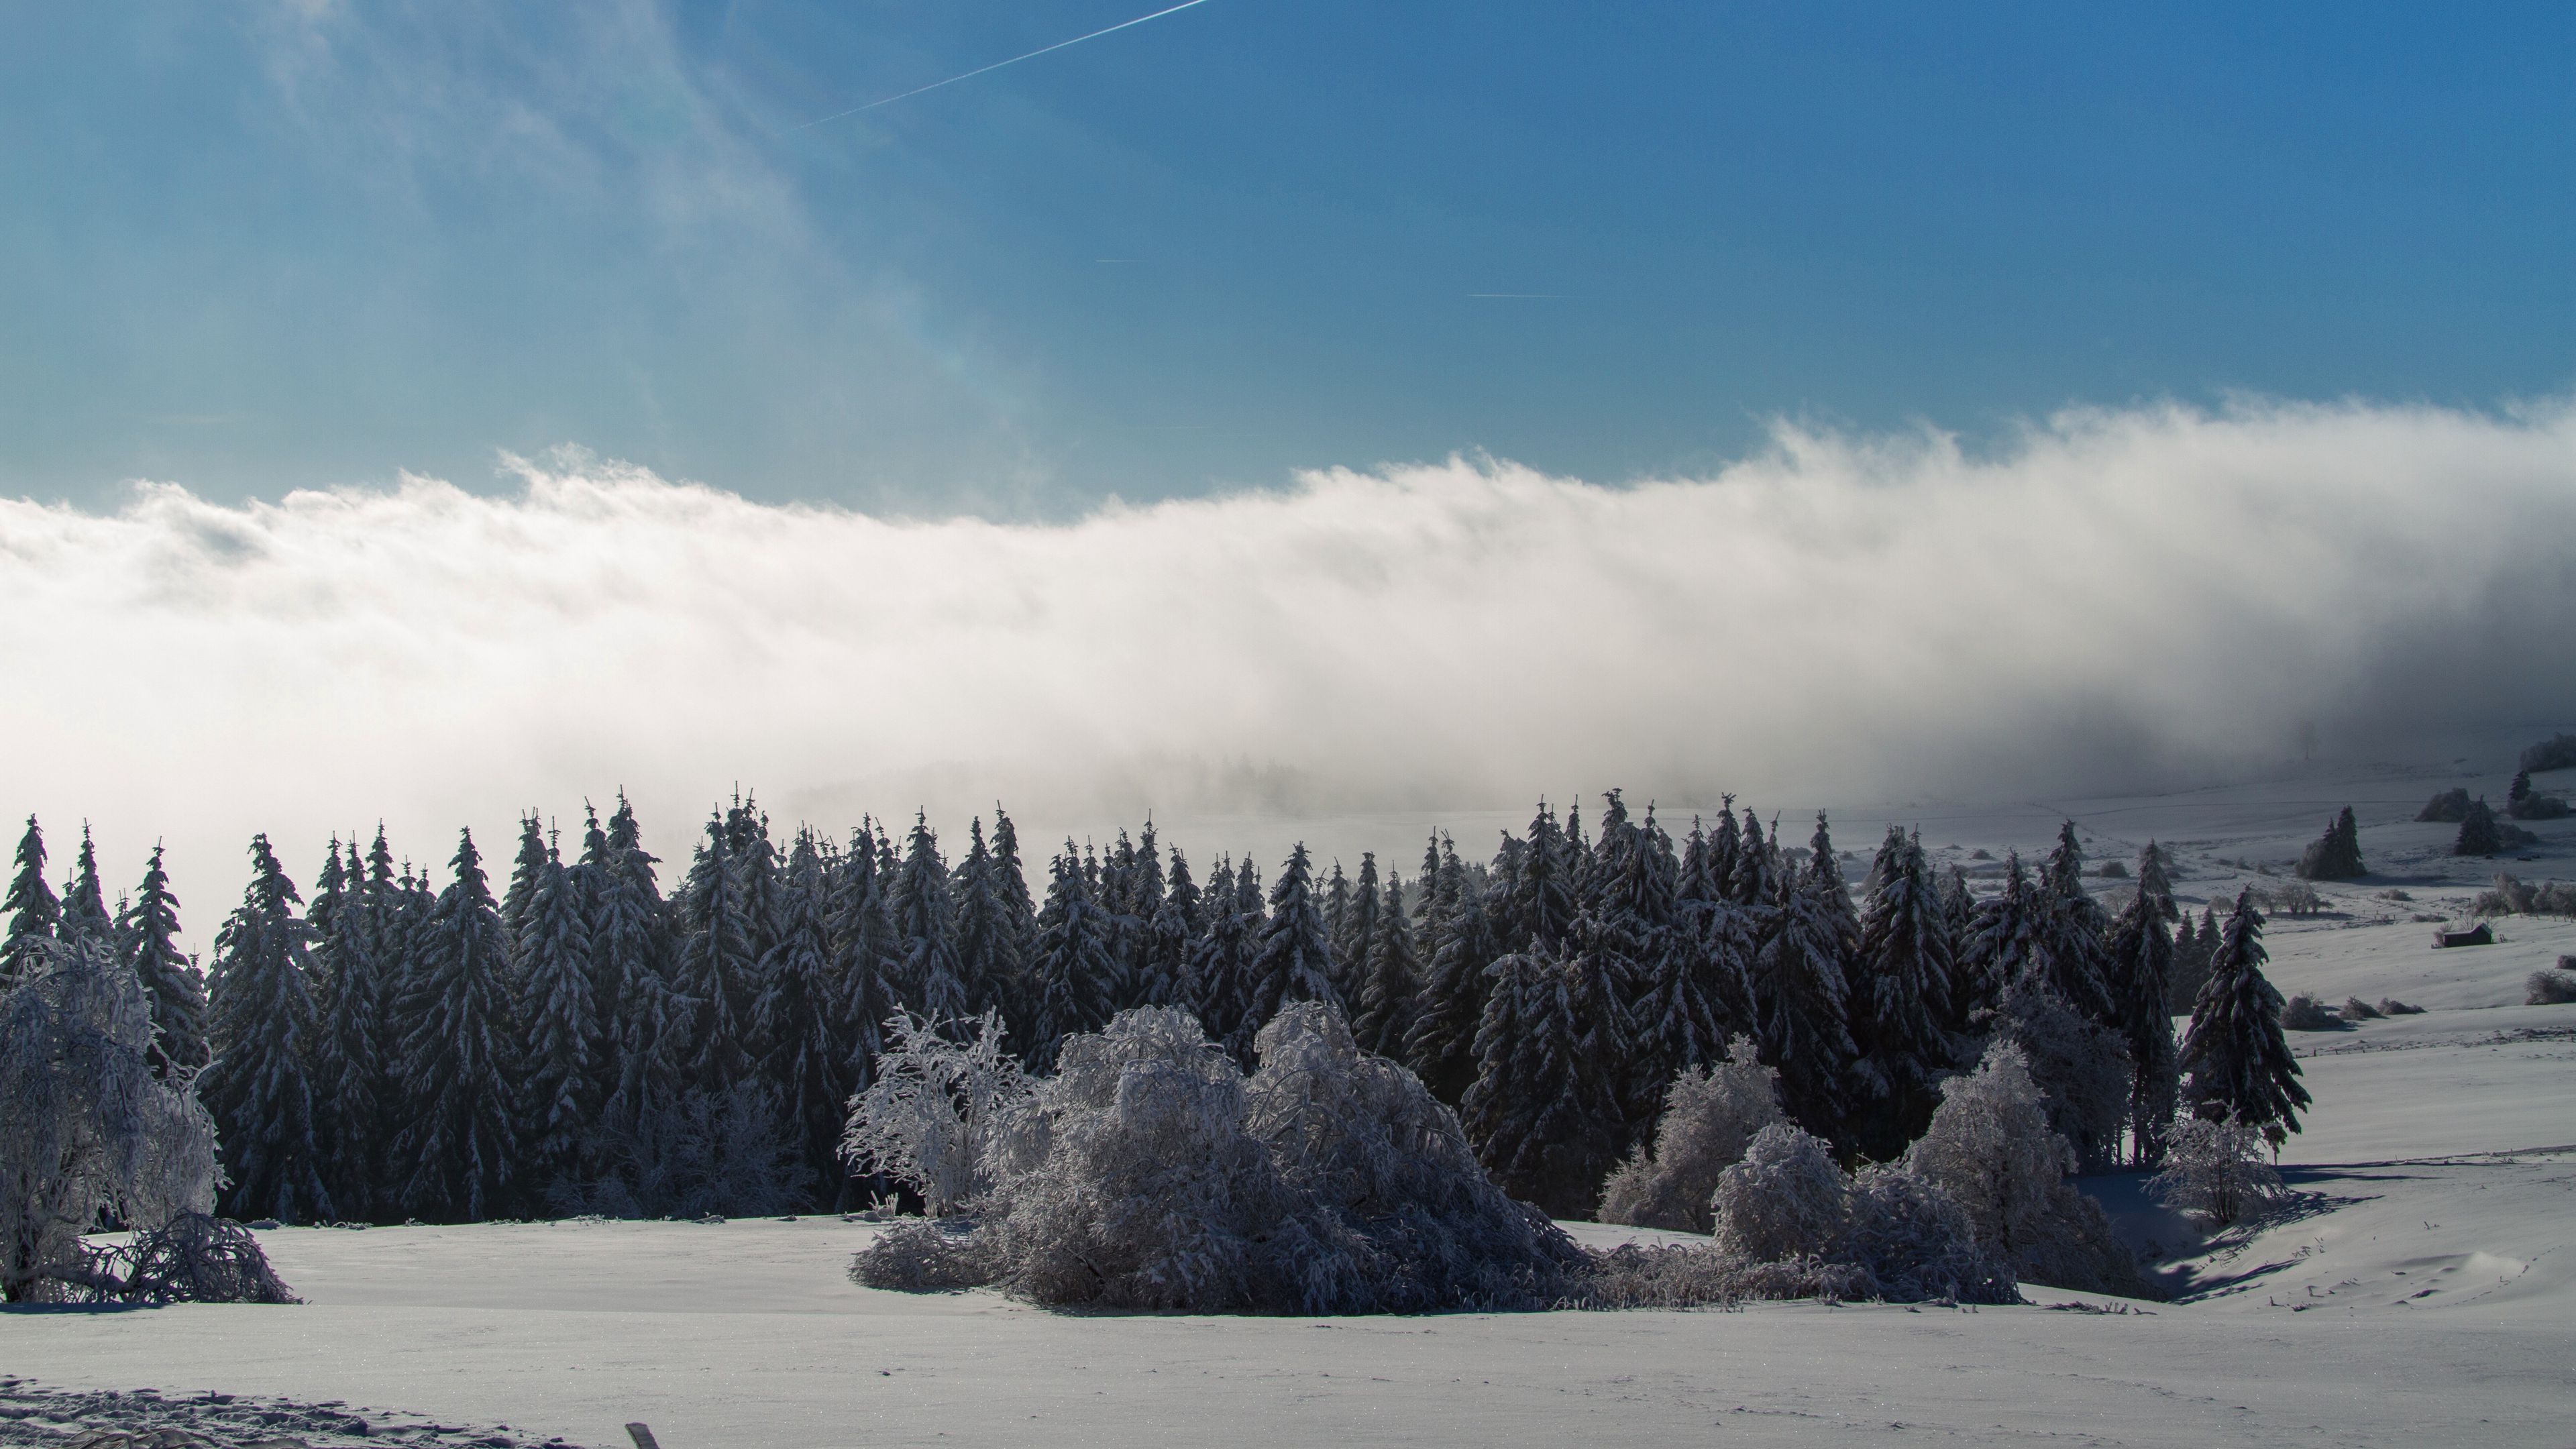 Download wallpaper 3840x2160 wasserkuppe, mountain, forest, winter, snow, storm 4k uhd 16:9 HD background